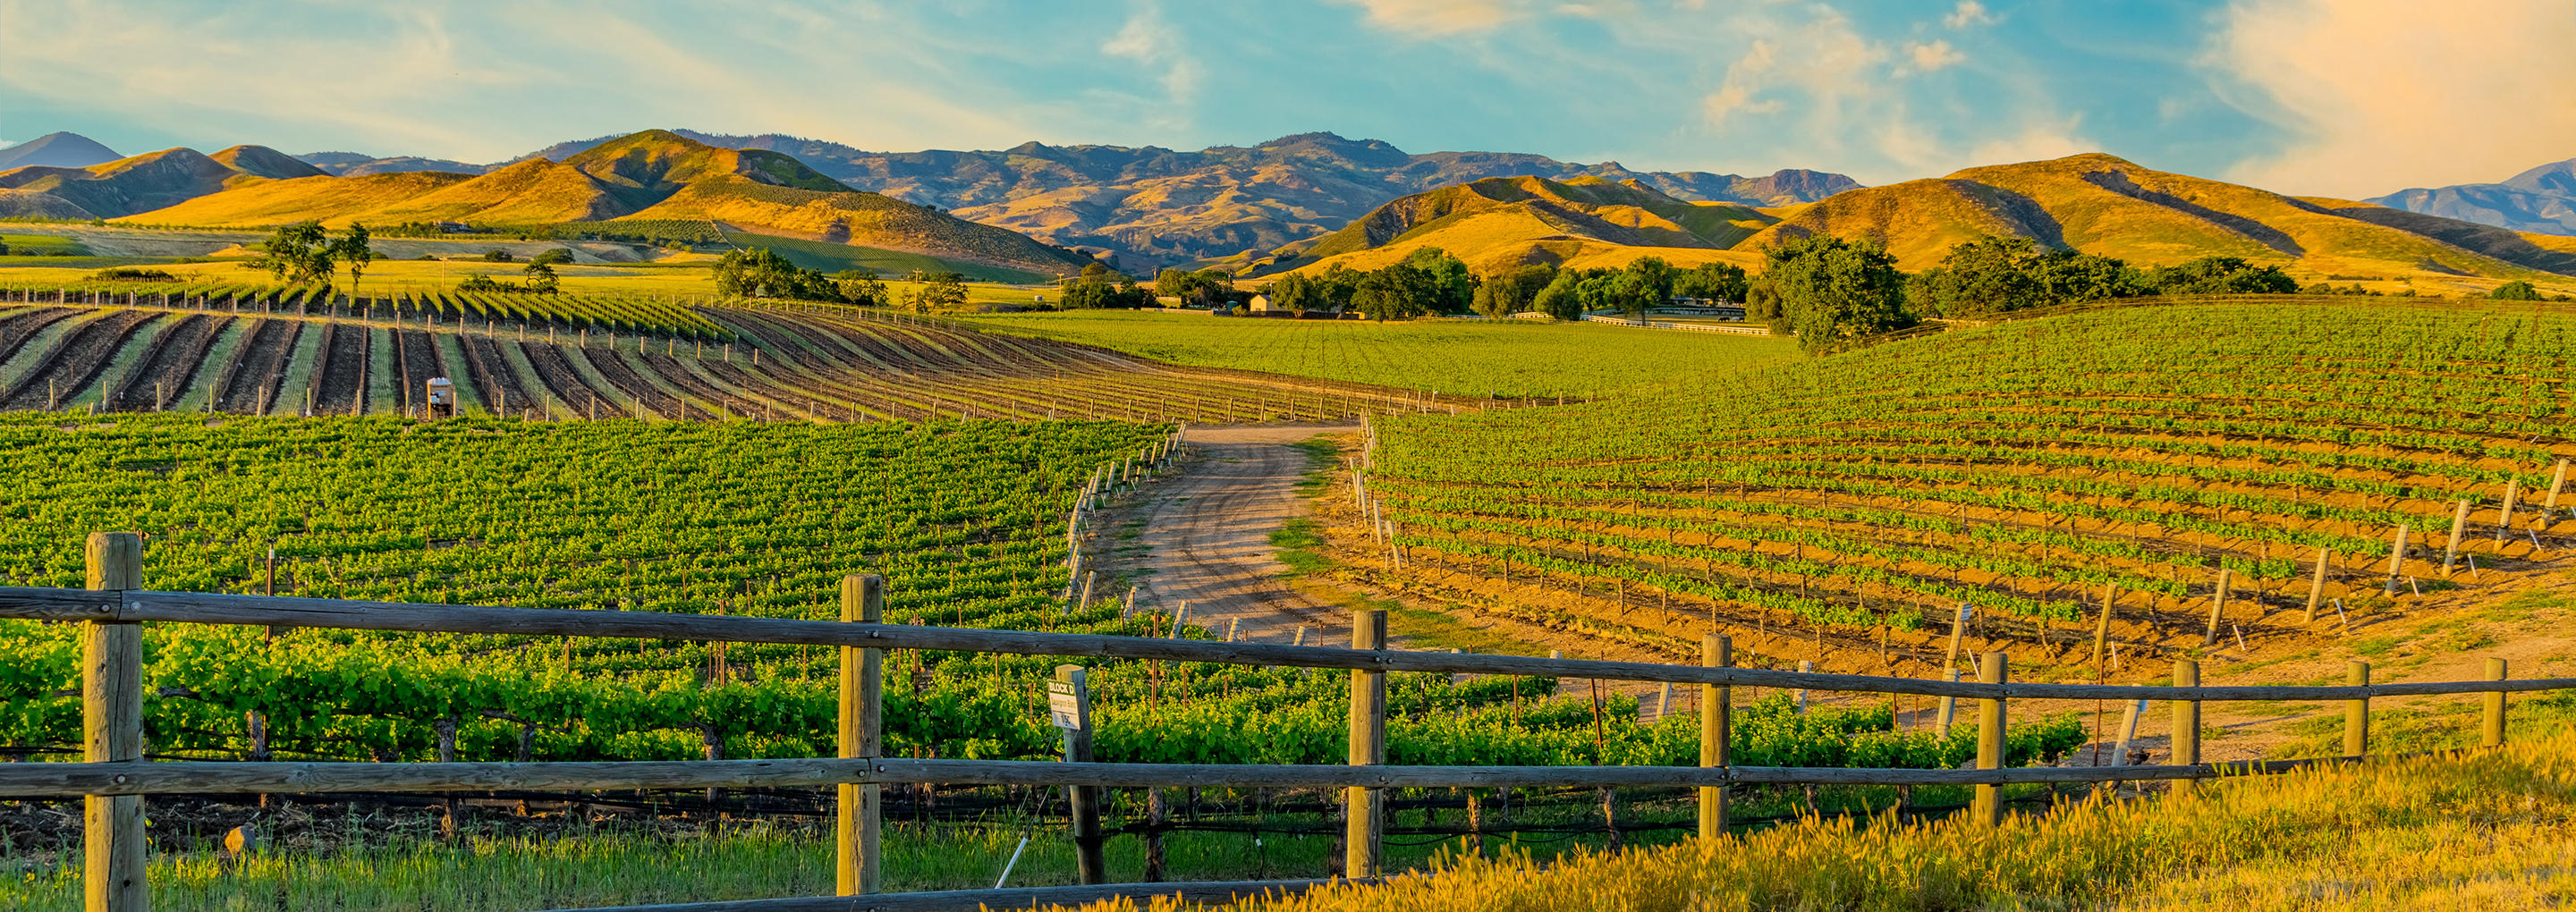 Vineyard in northern California